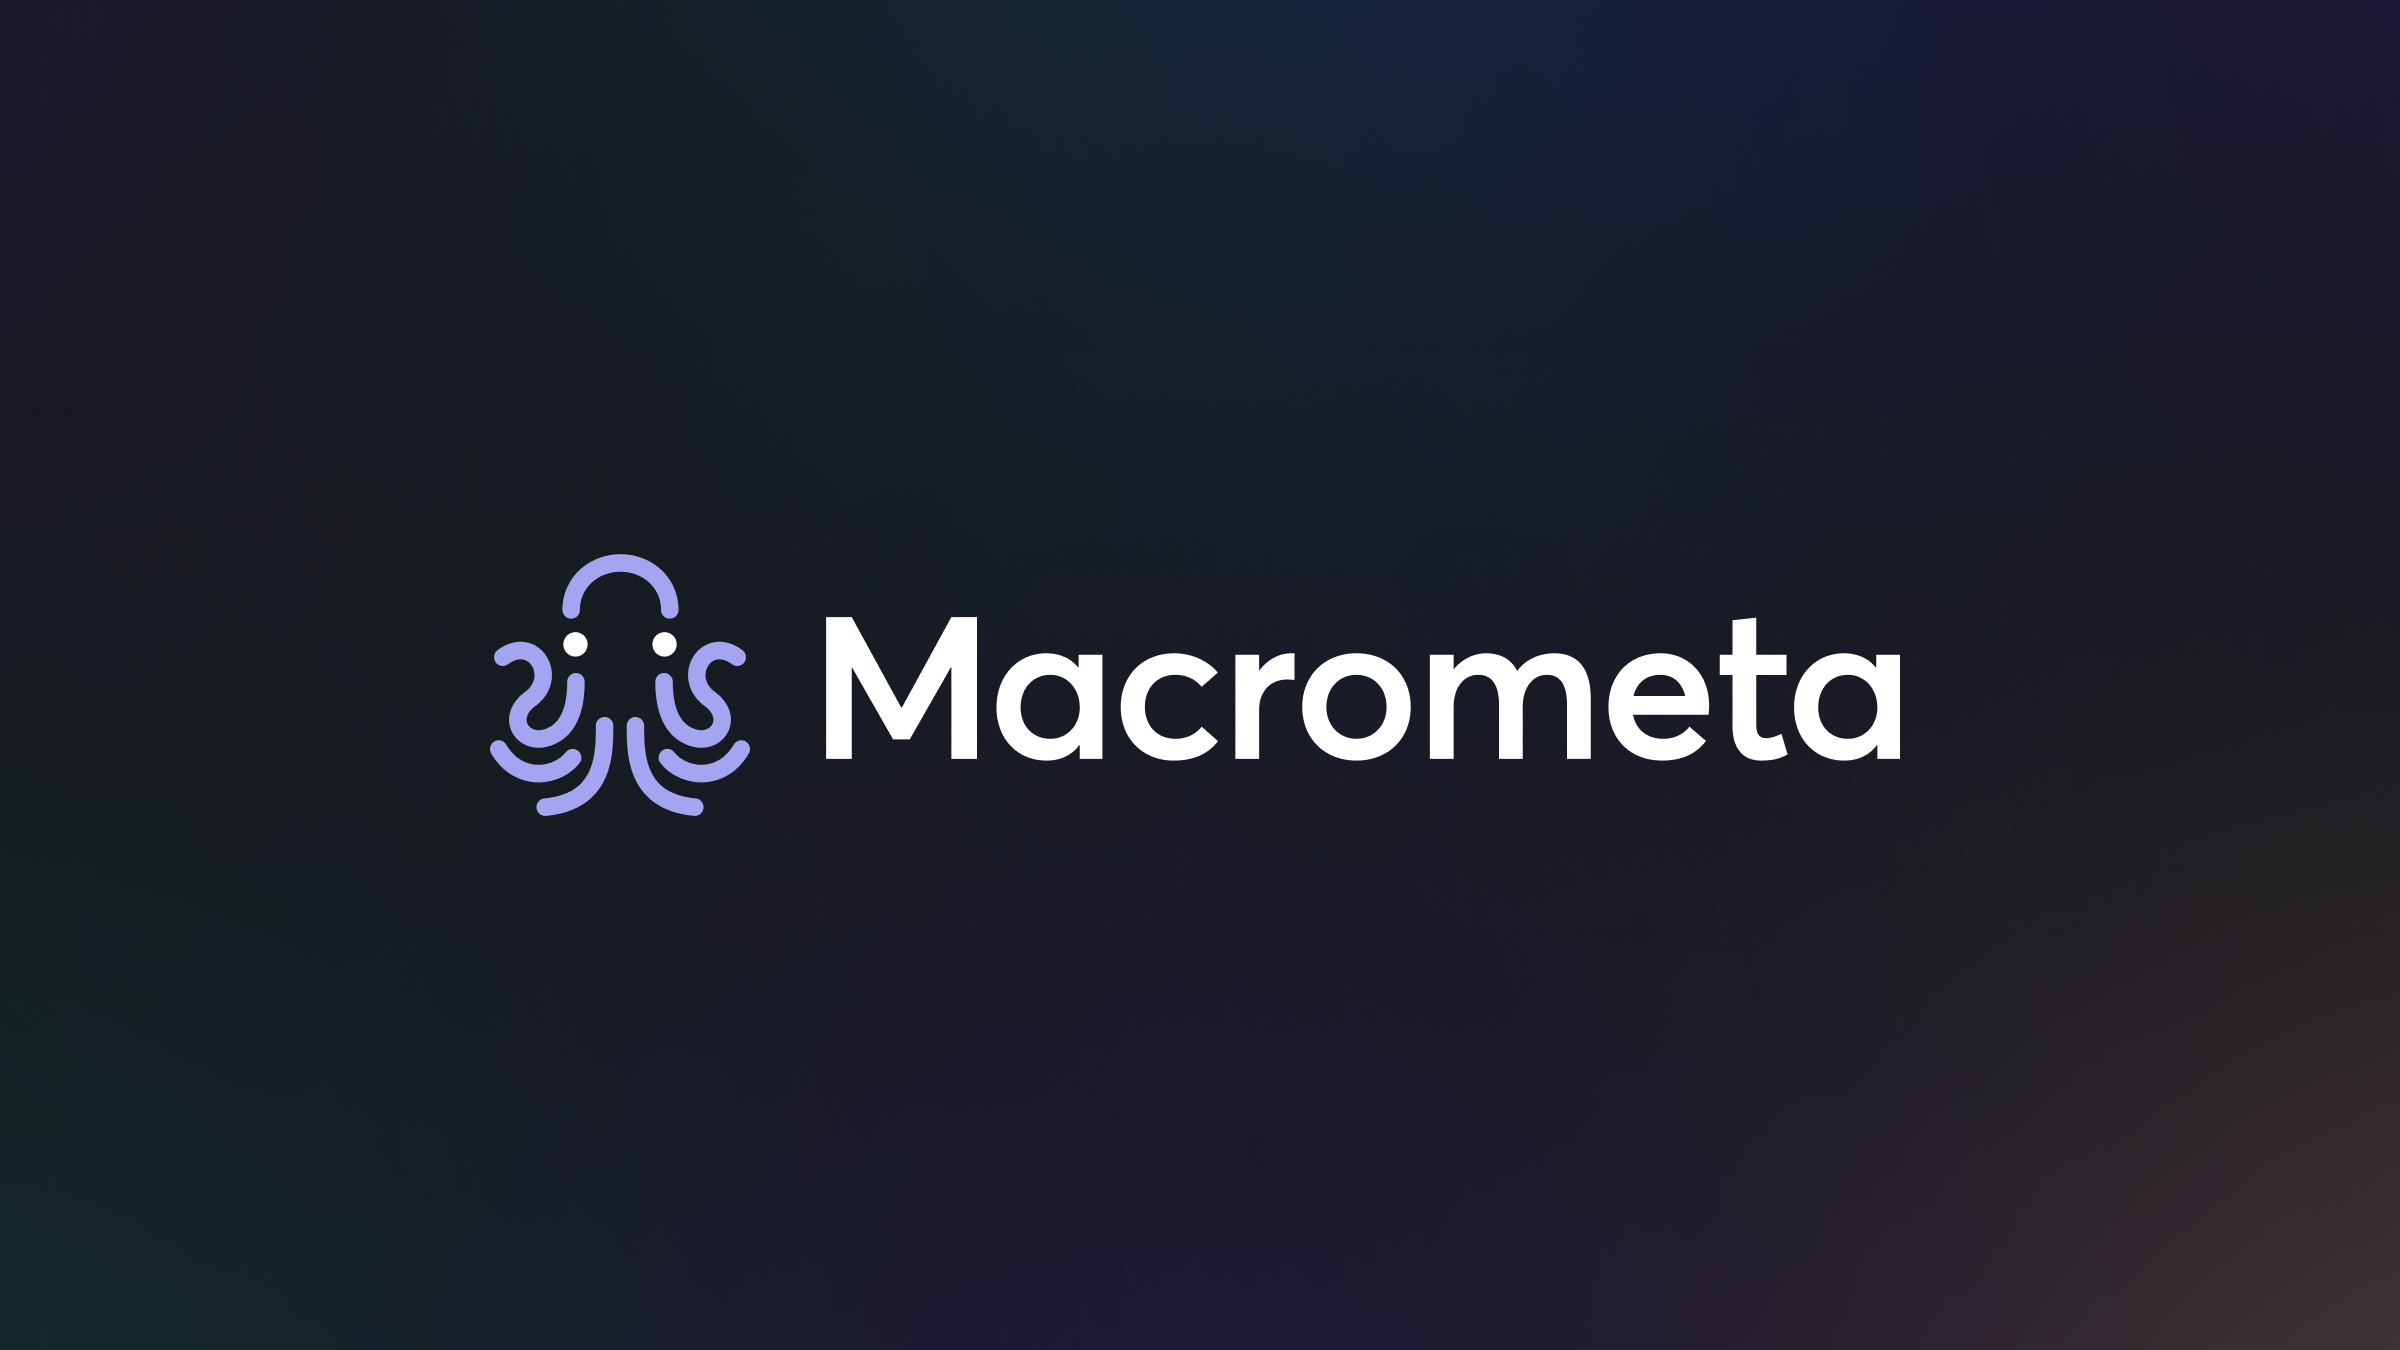 Preview image for "Macrometa Brand Refresh"